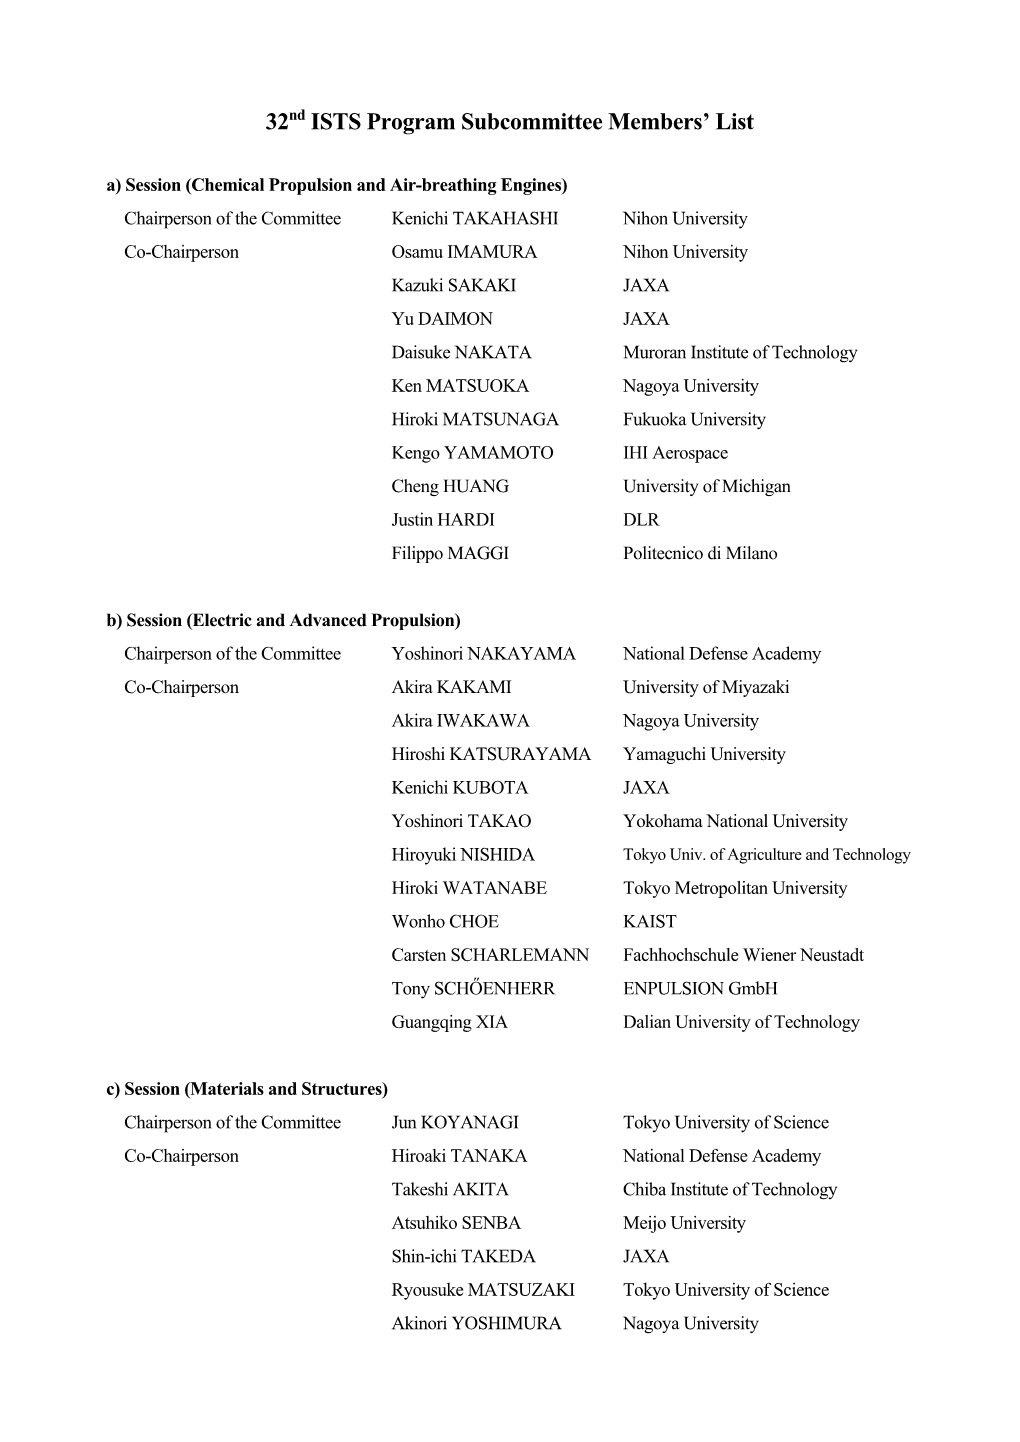 Program Subcommittee Member's List